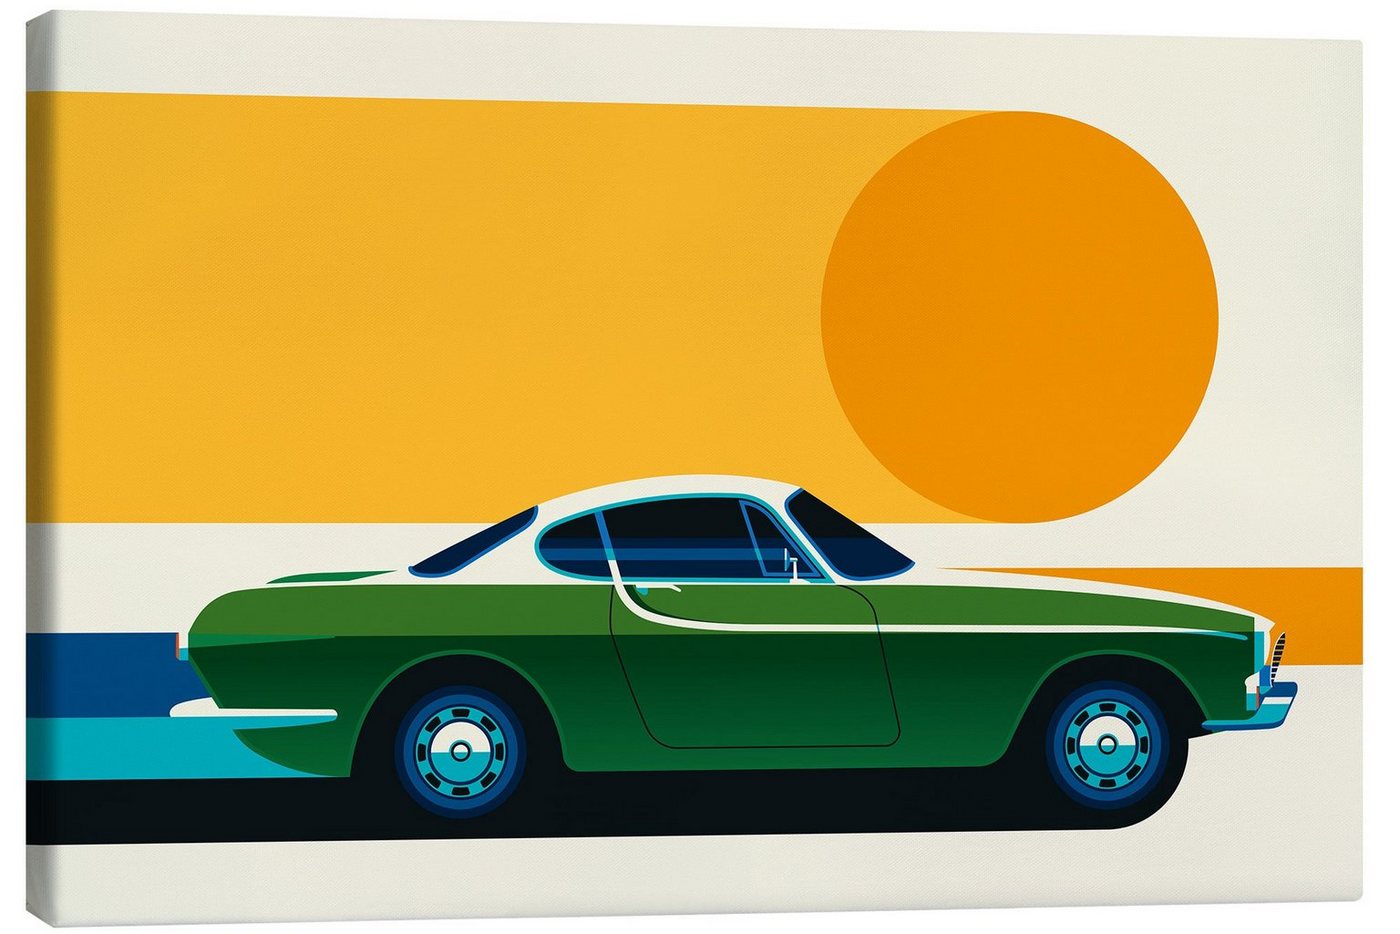 Posterlounge Leinwandbild Bo Lundberg, Green vintage sports car side, Lounge Illustration von Posterlounge